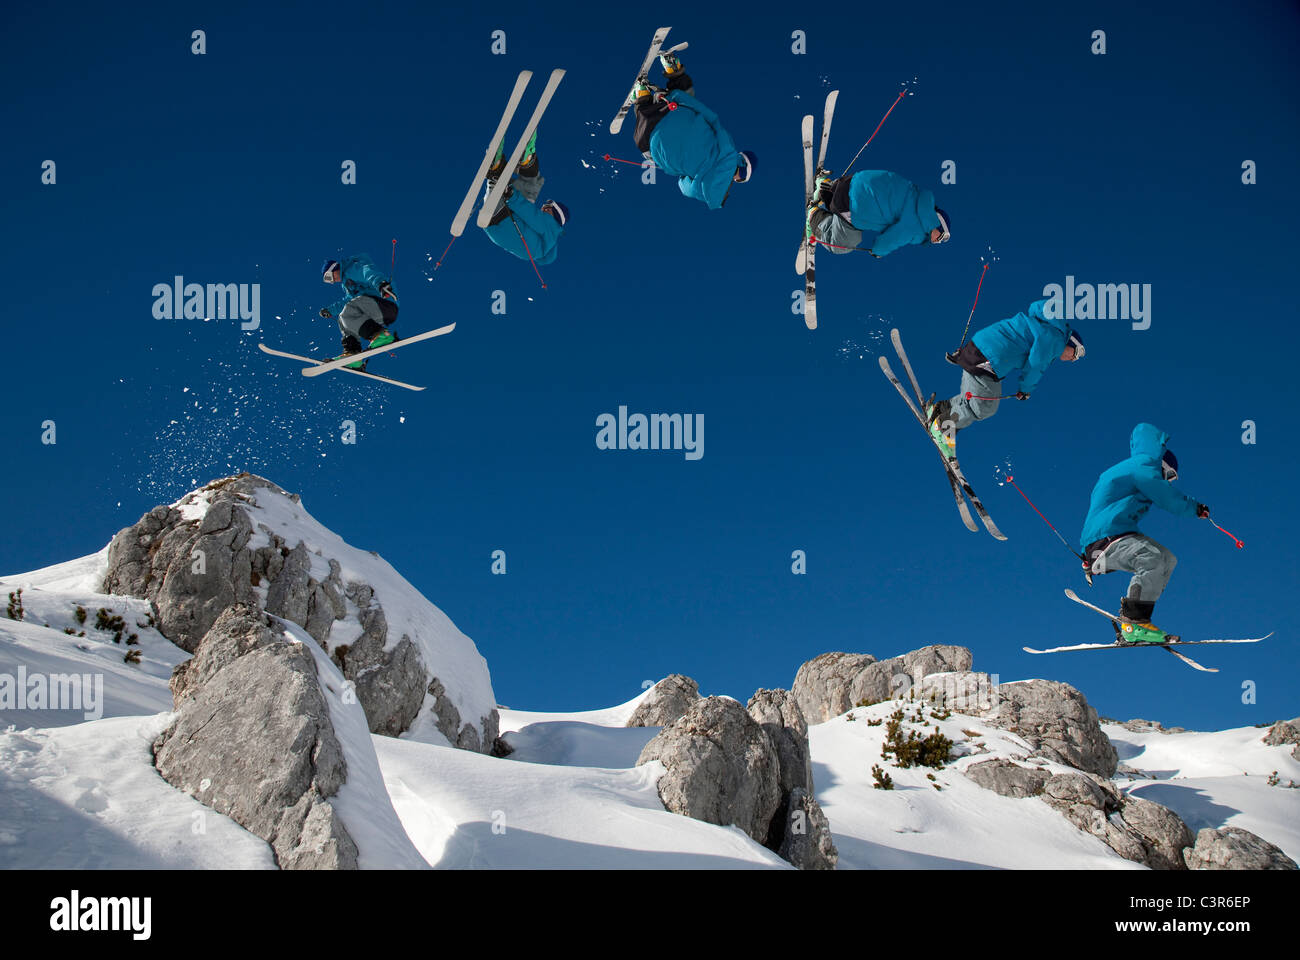 Skier doing dangerous free ride jump Stock Photo